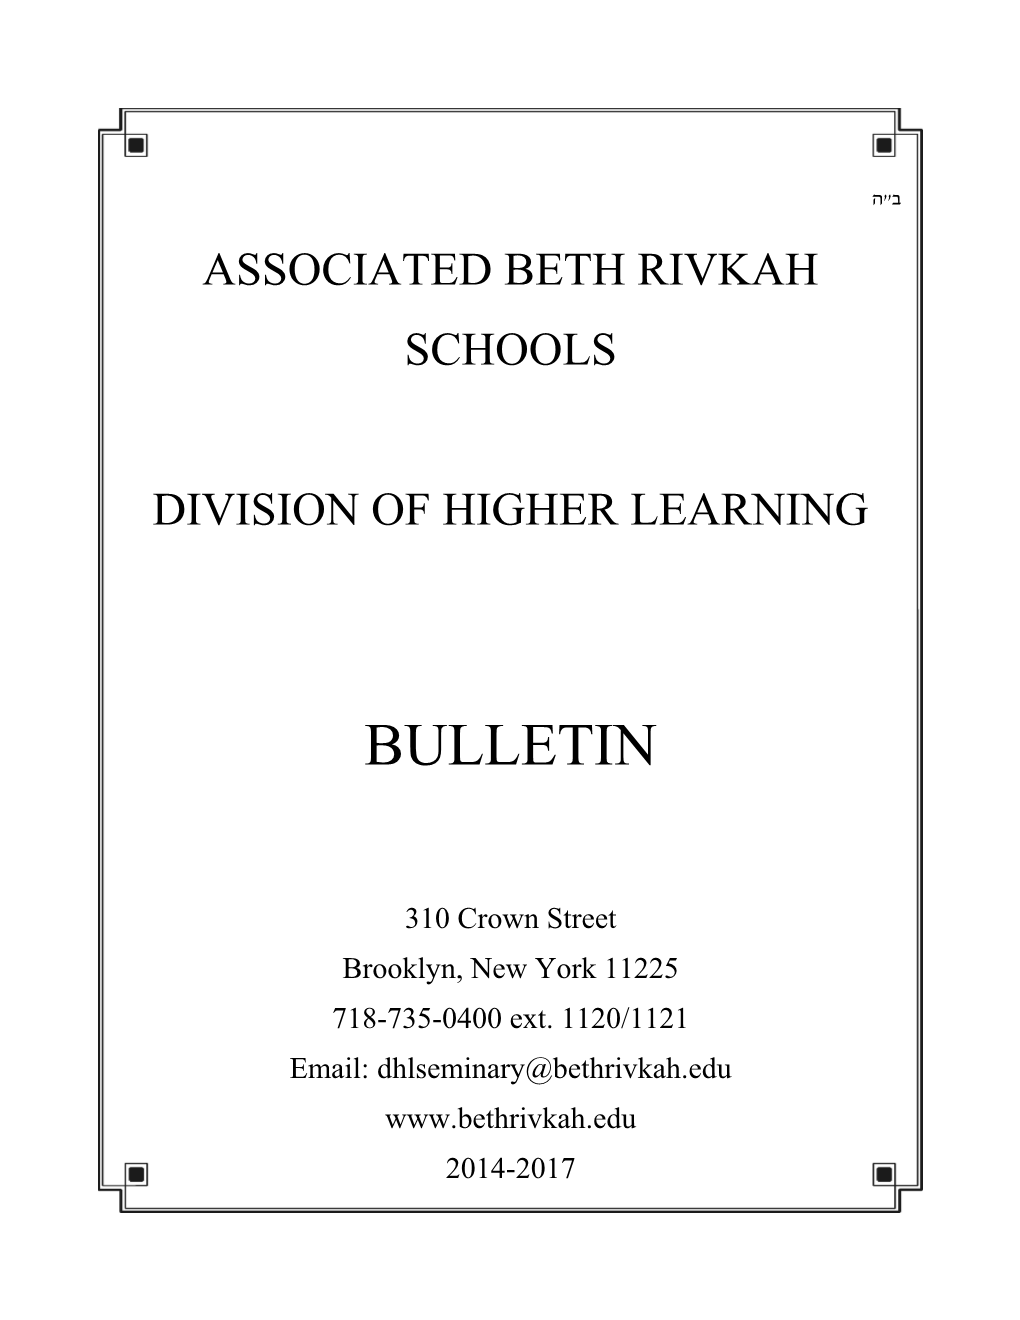 Associated Beth Rivkah Schools